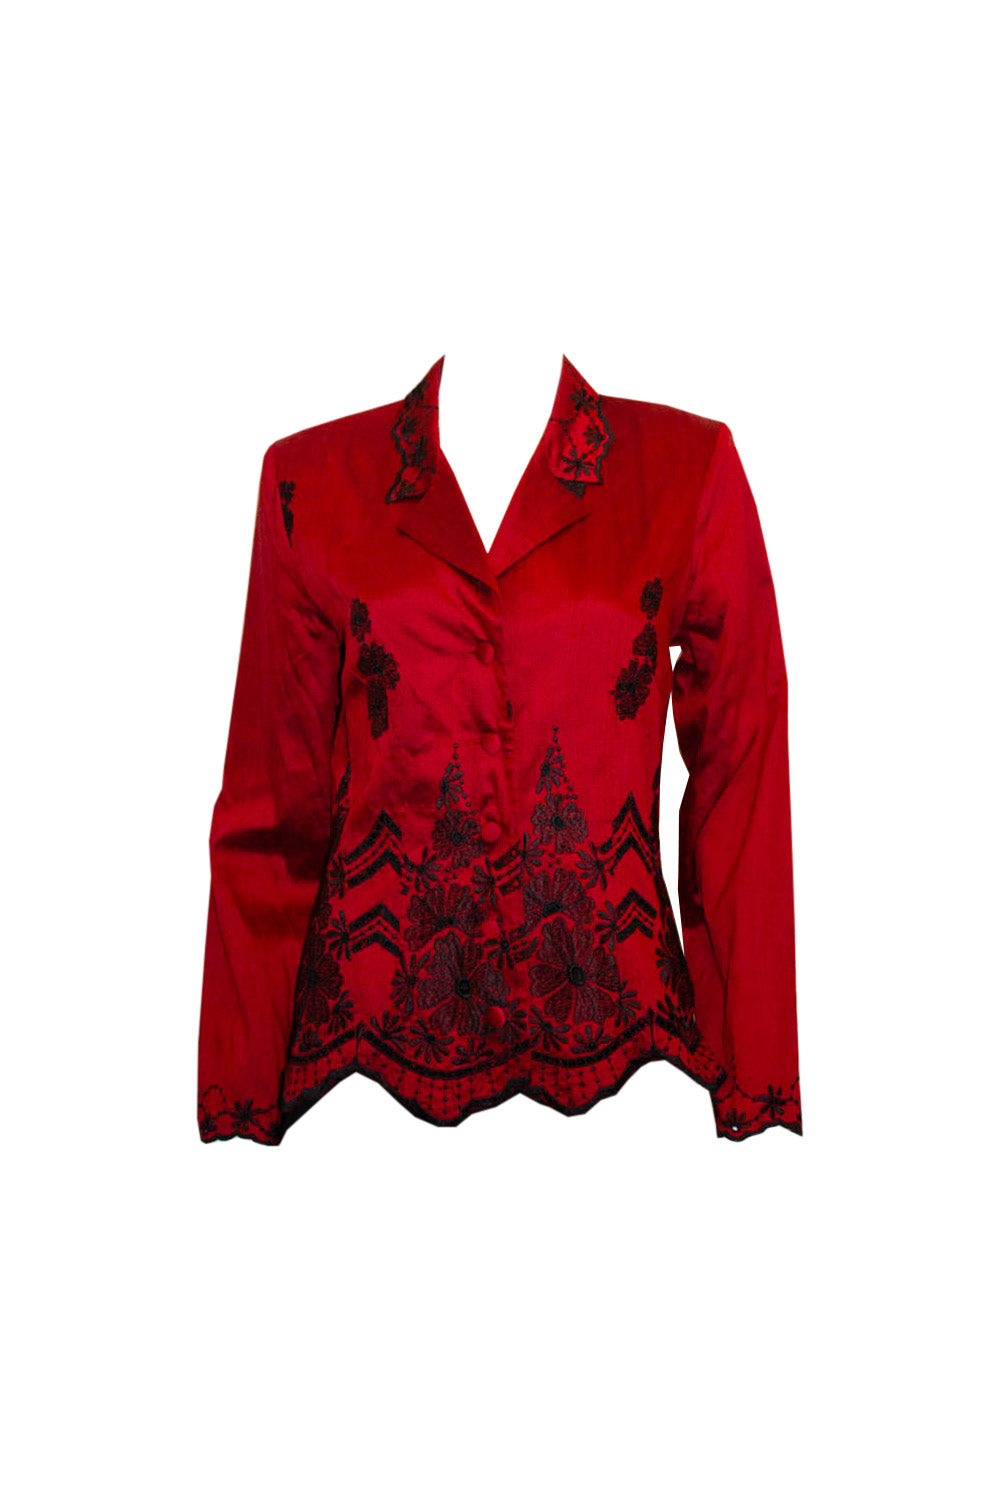 Vintage Monsoon Silk Jacket with wonderful embroidery